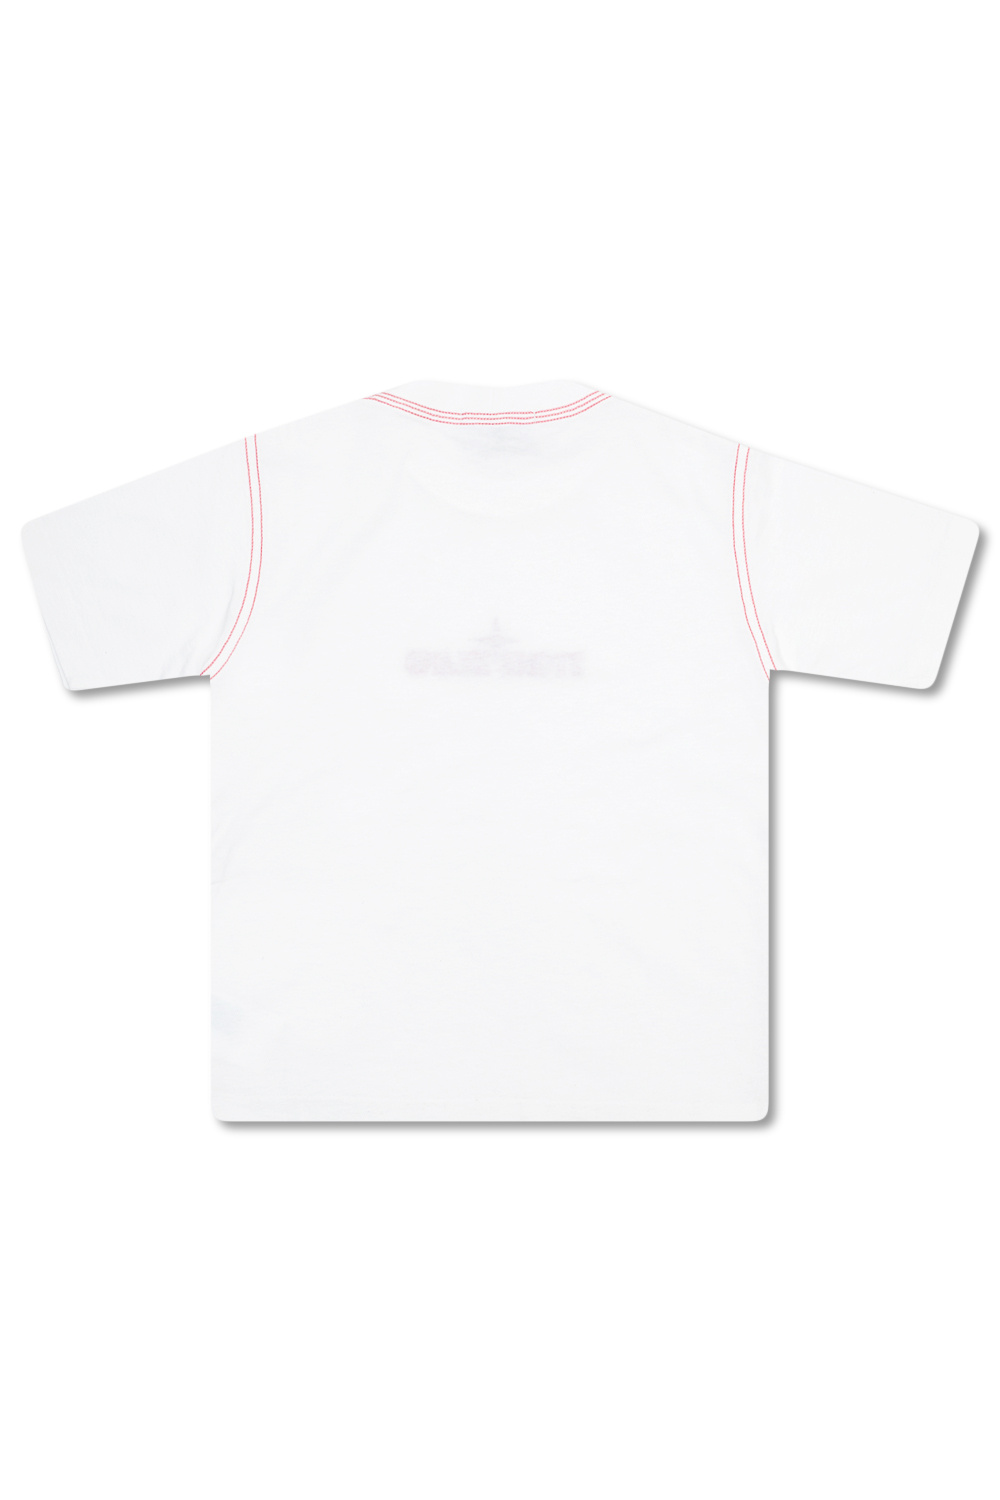 Nike Mens Running Jackets T-shirt with logo